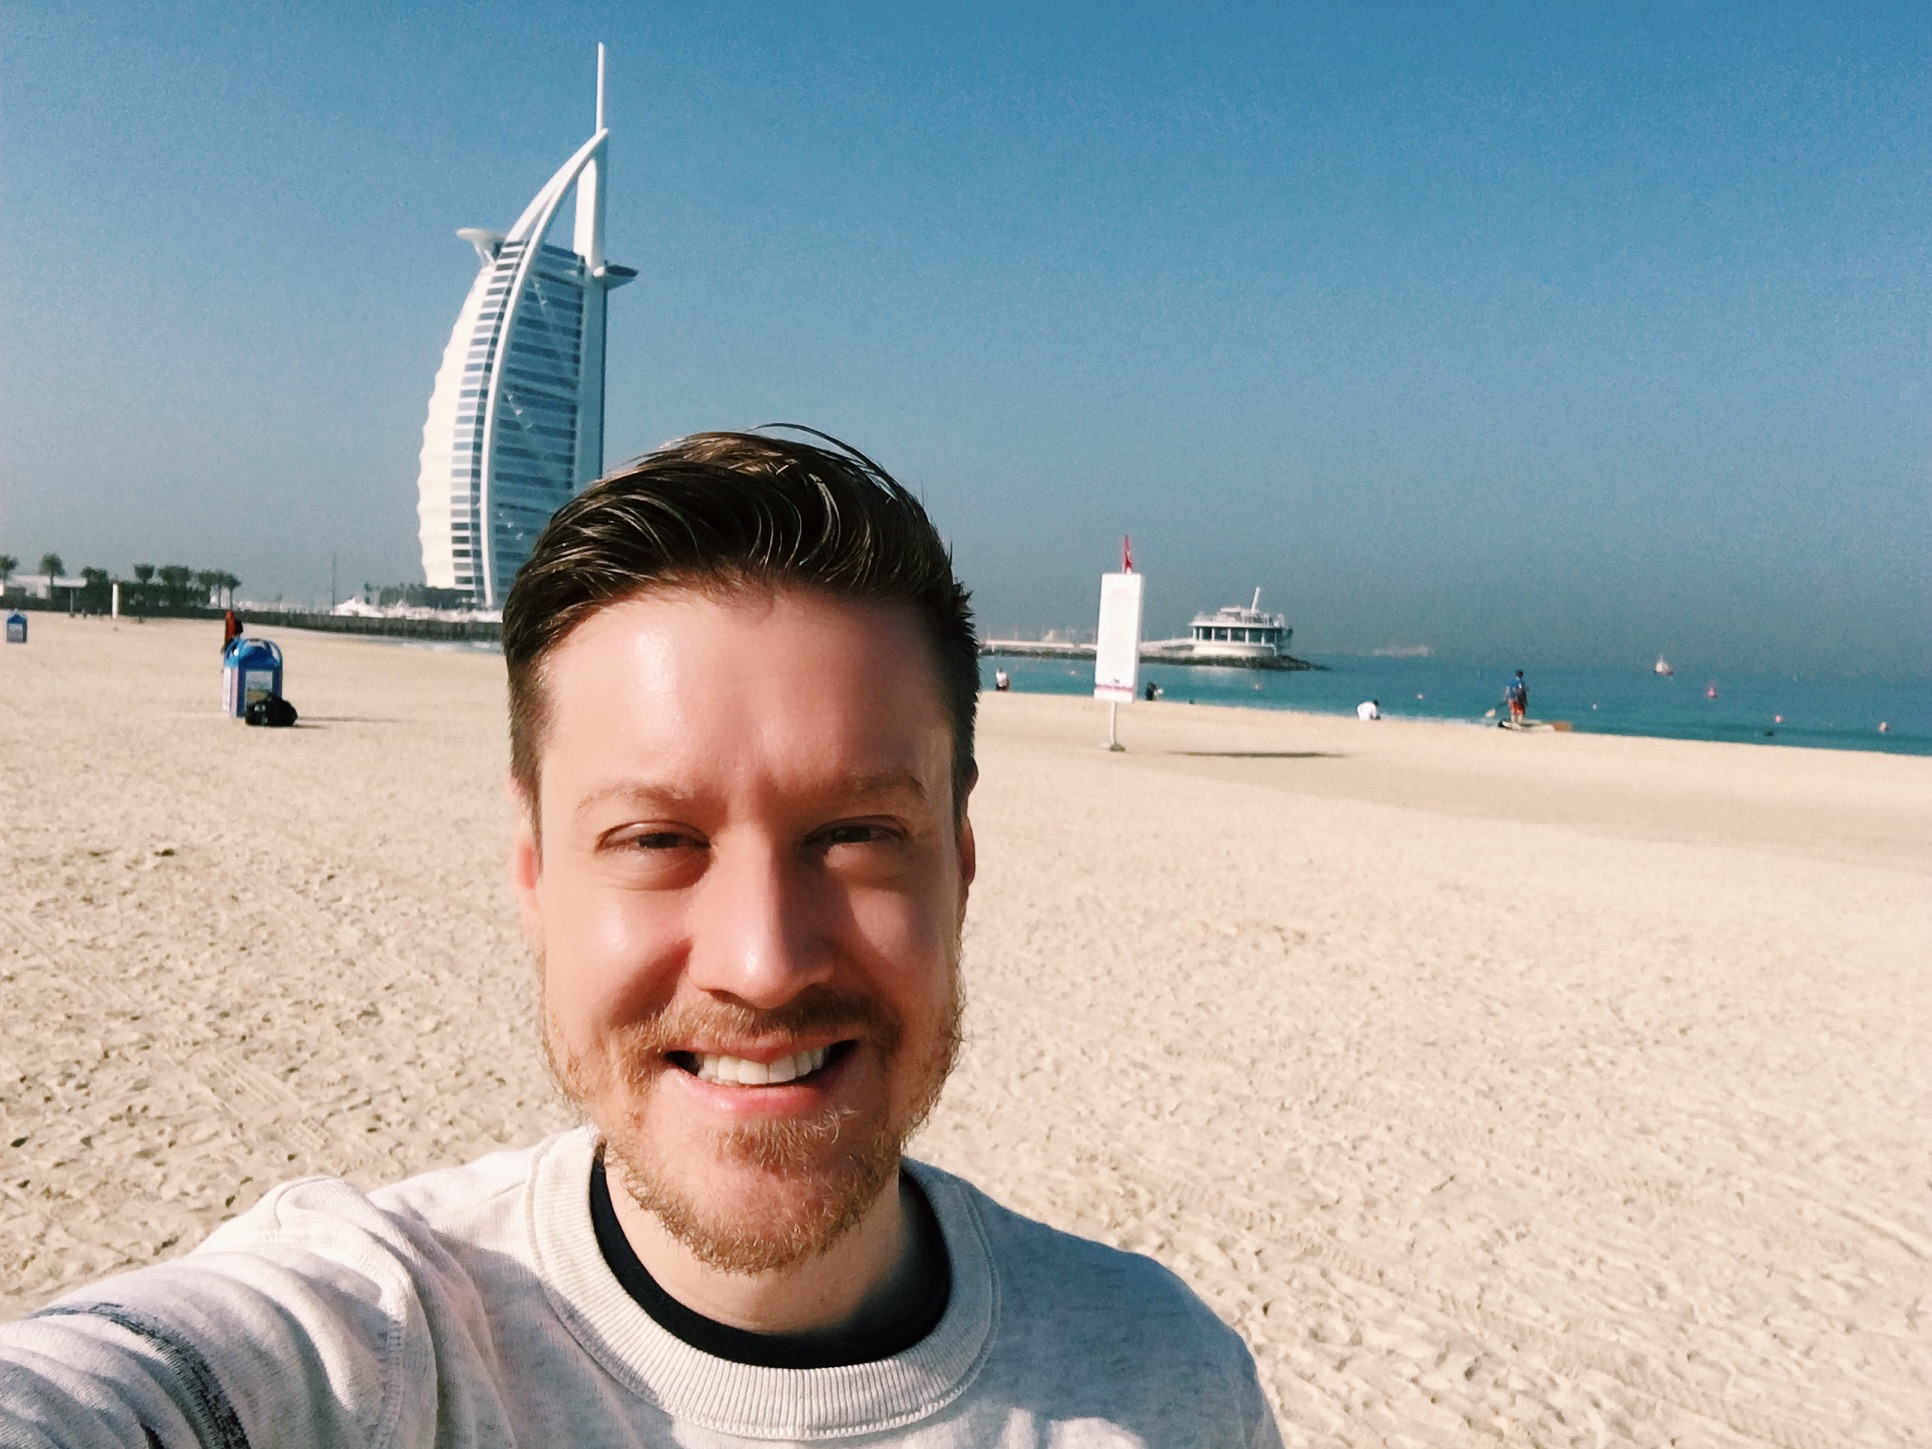 Jumeirah Beach and Burj AlArab